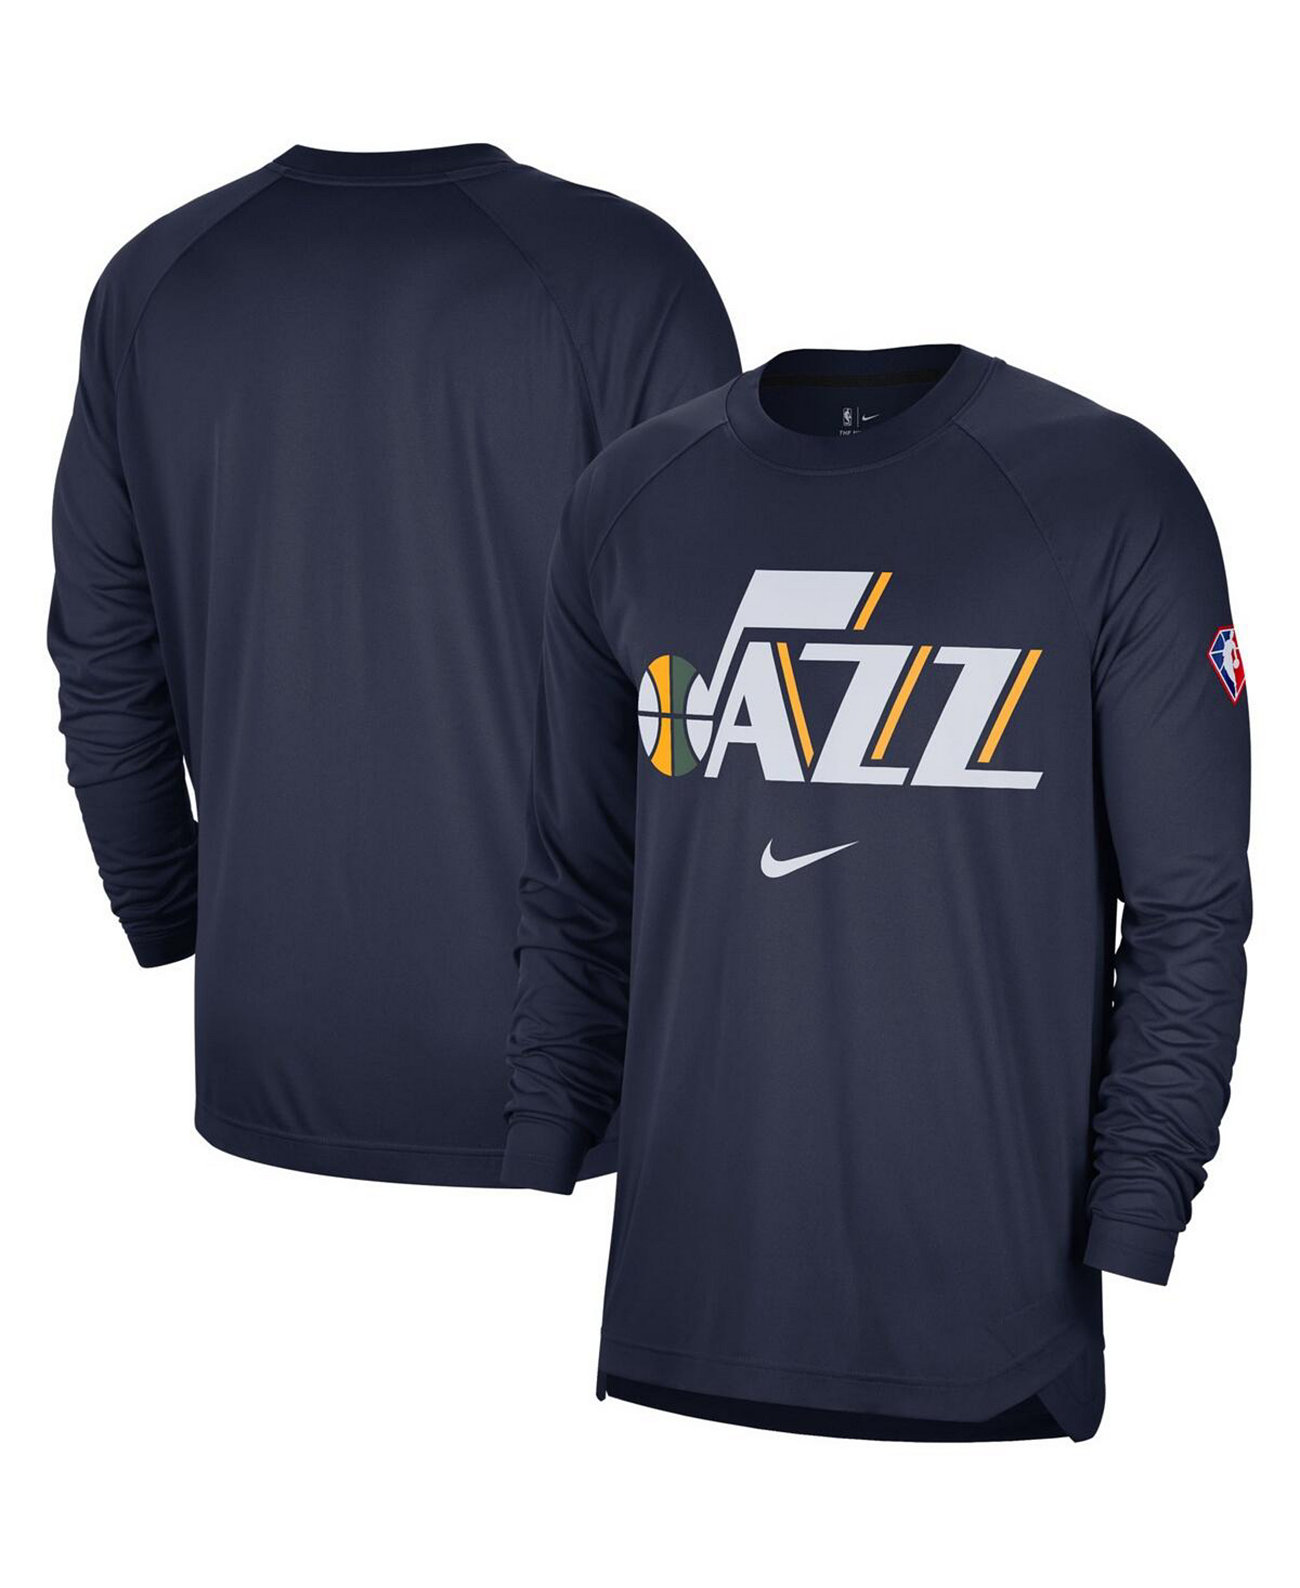 Мужская футболка с длинным рукавом и регланом Navy Utah Jazz 75th Anniversary Pregame Shooting Performance Nike